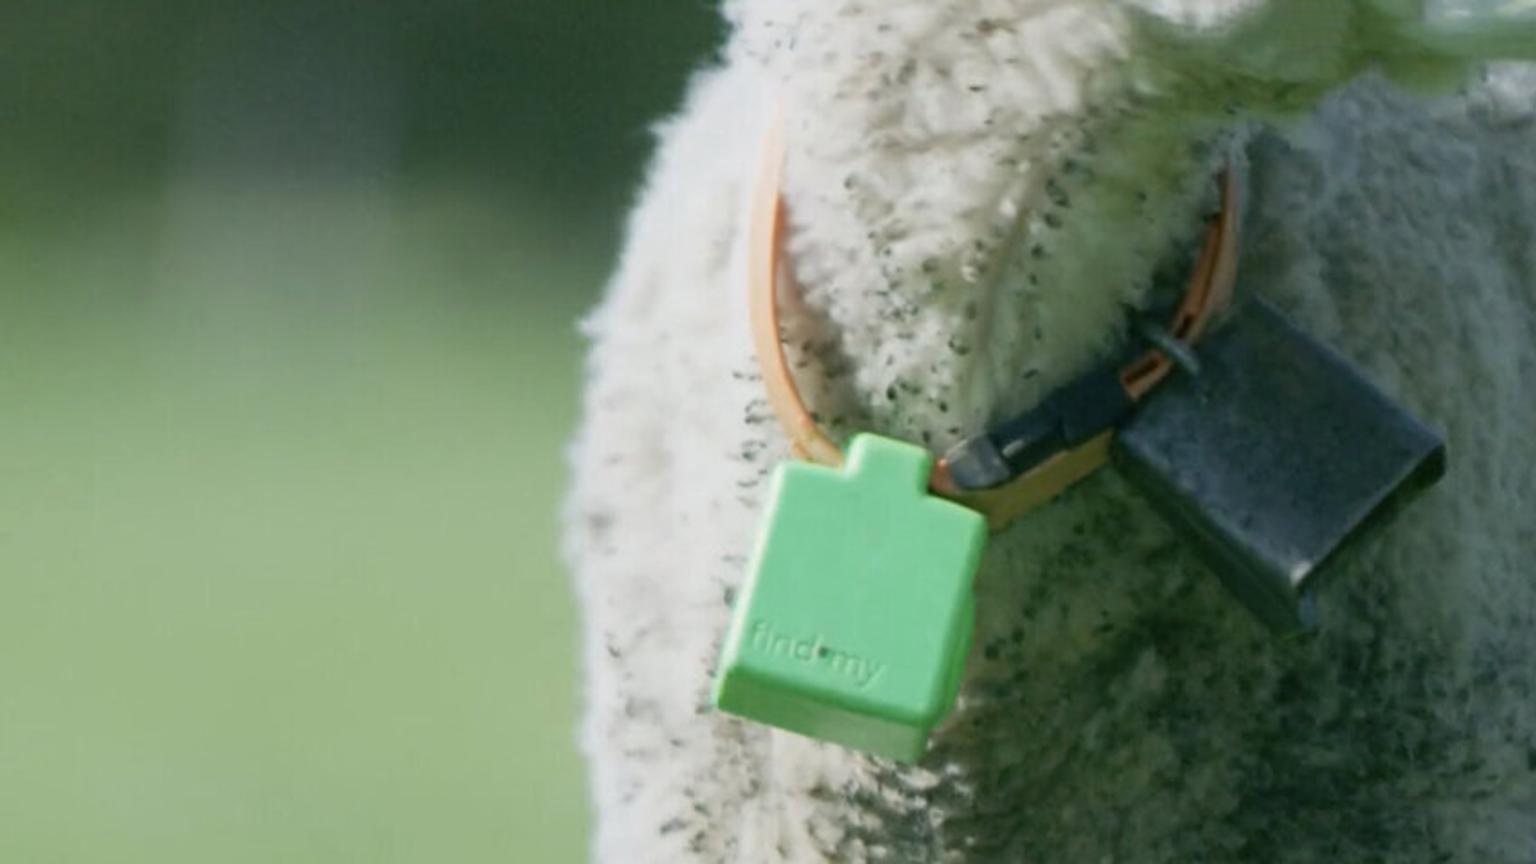 Sheep wearing findmy collar